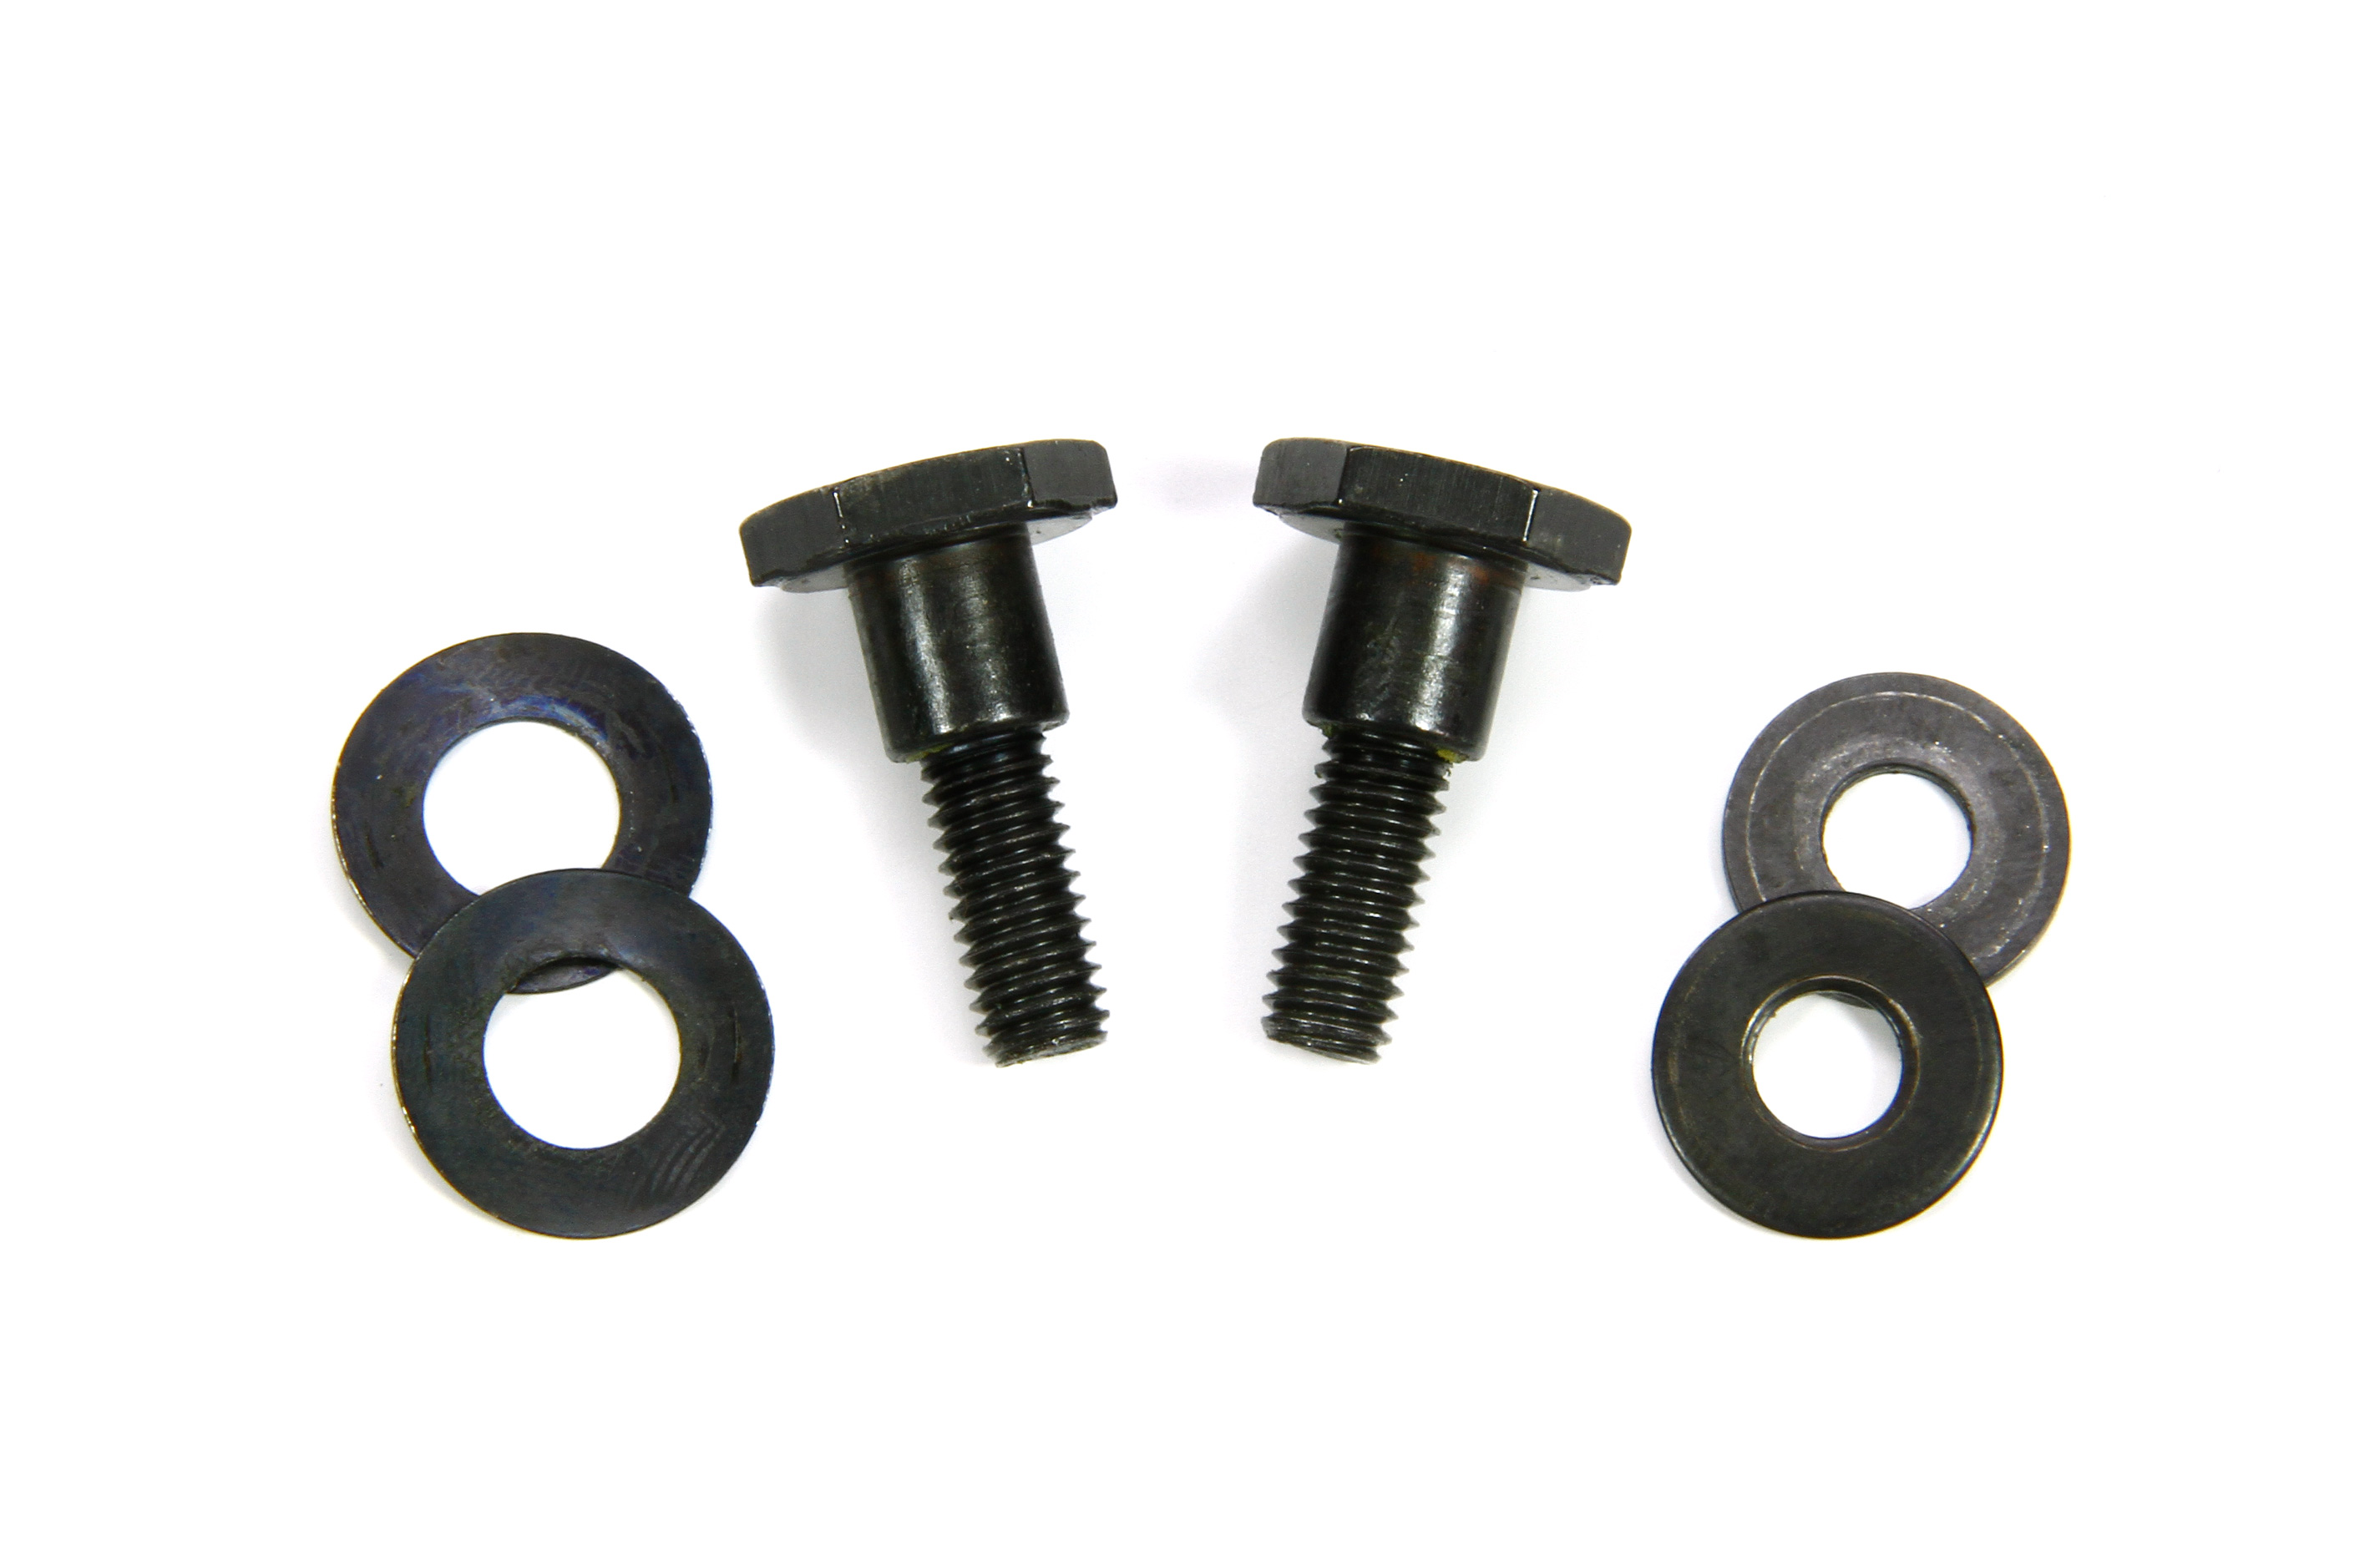 5718 FG Tuning dowel screws clutch blocks for Chung Yang